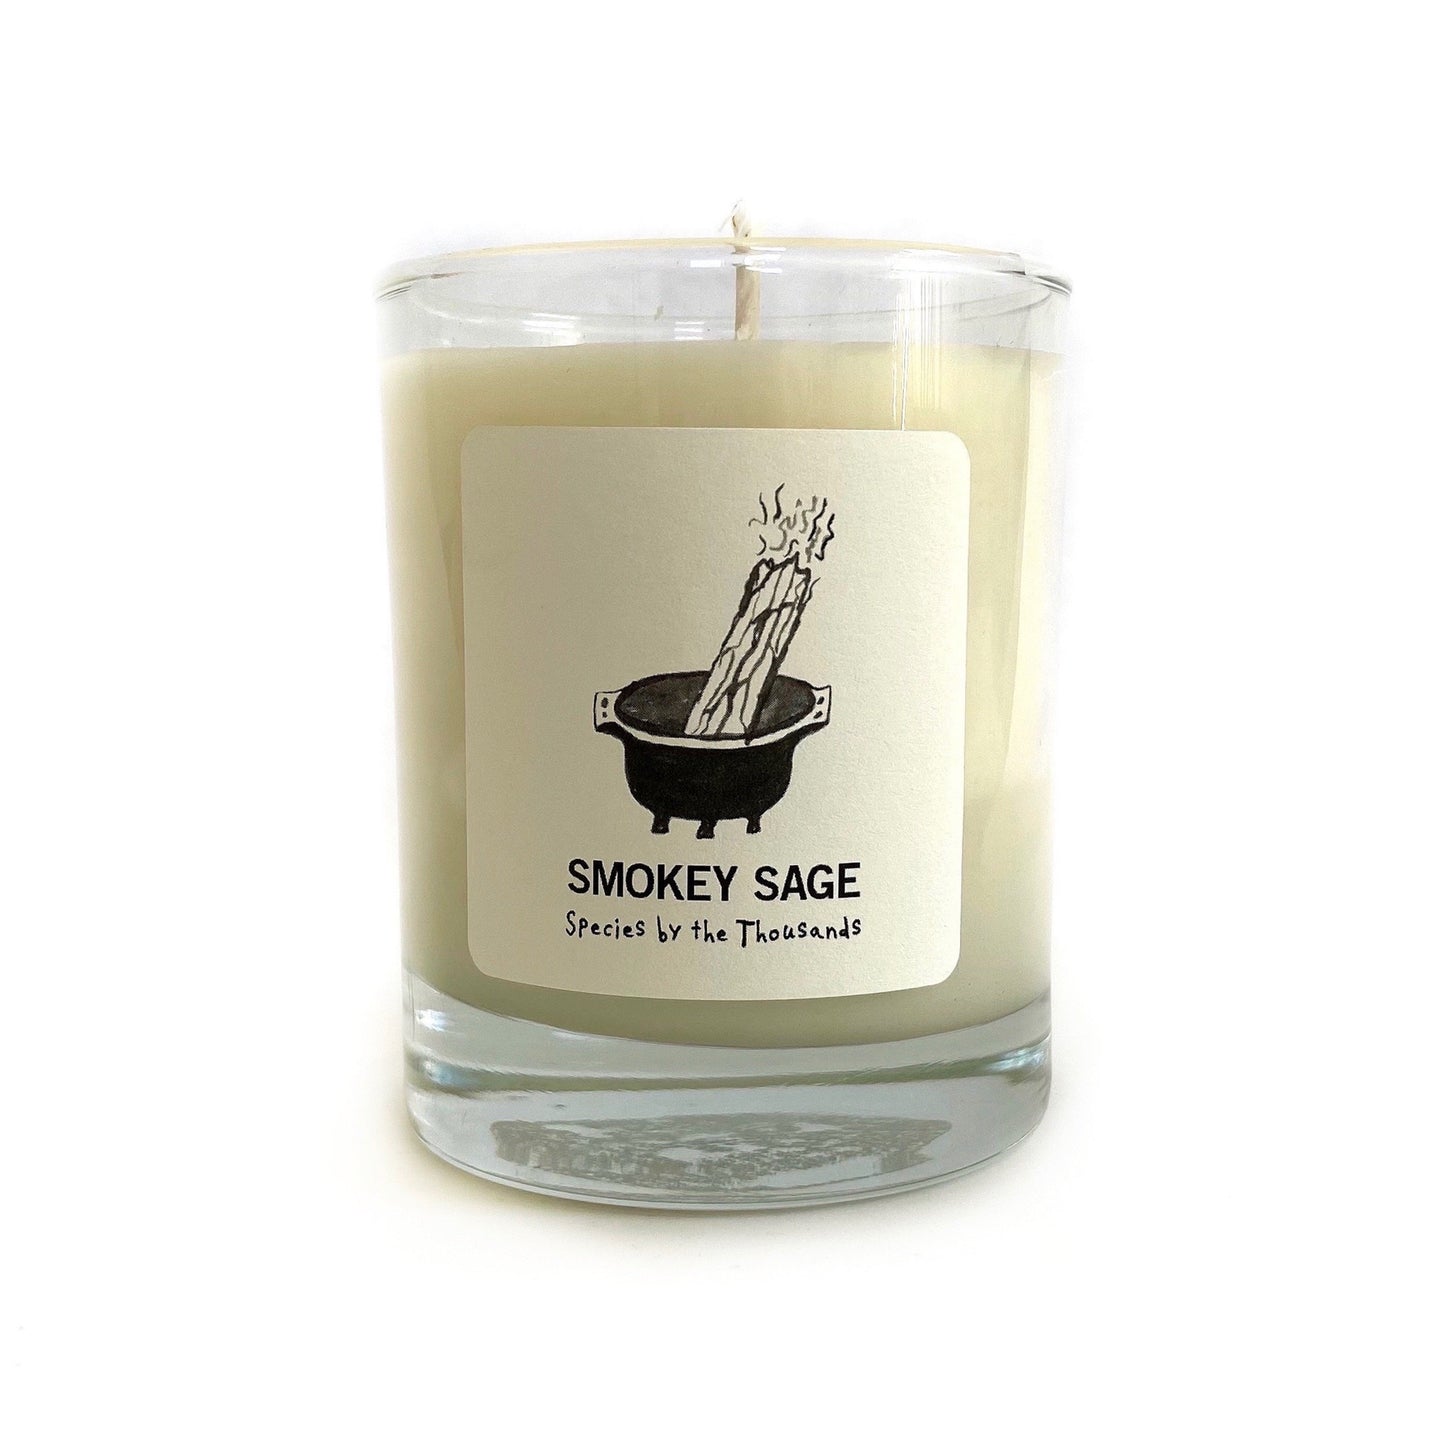 Smokey Sage candle